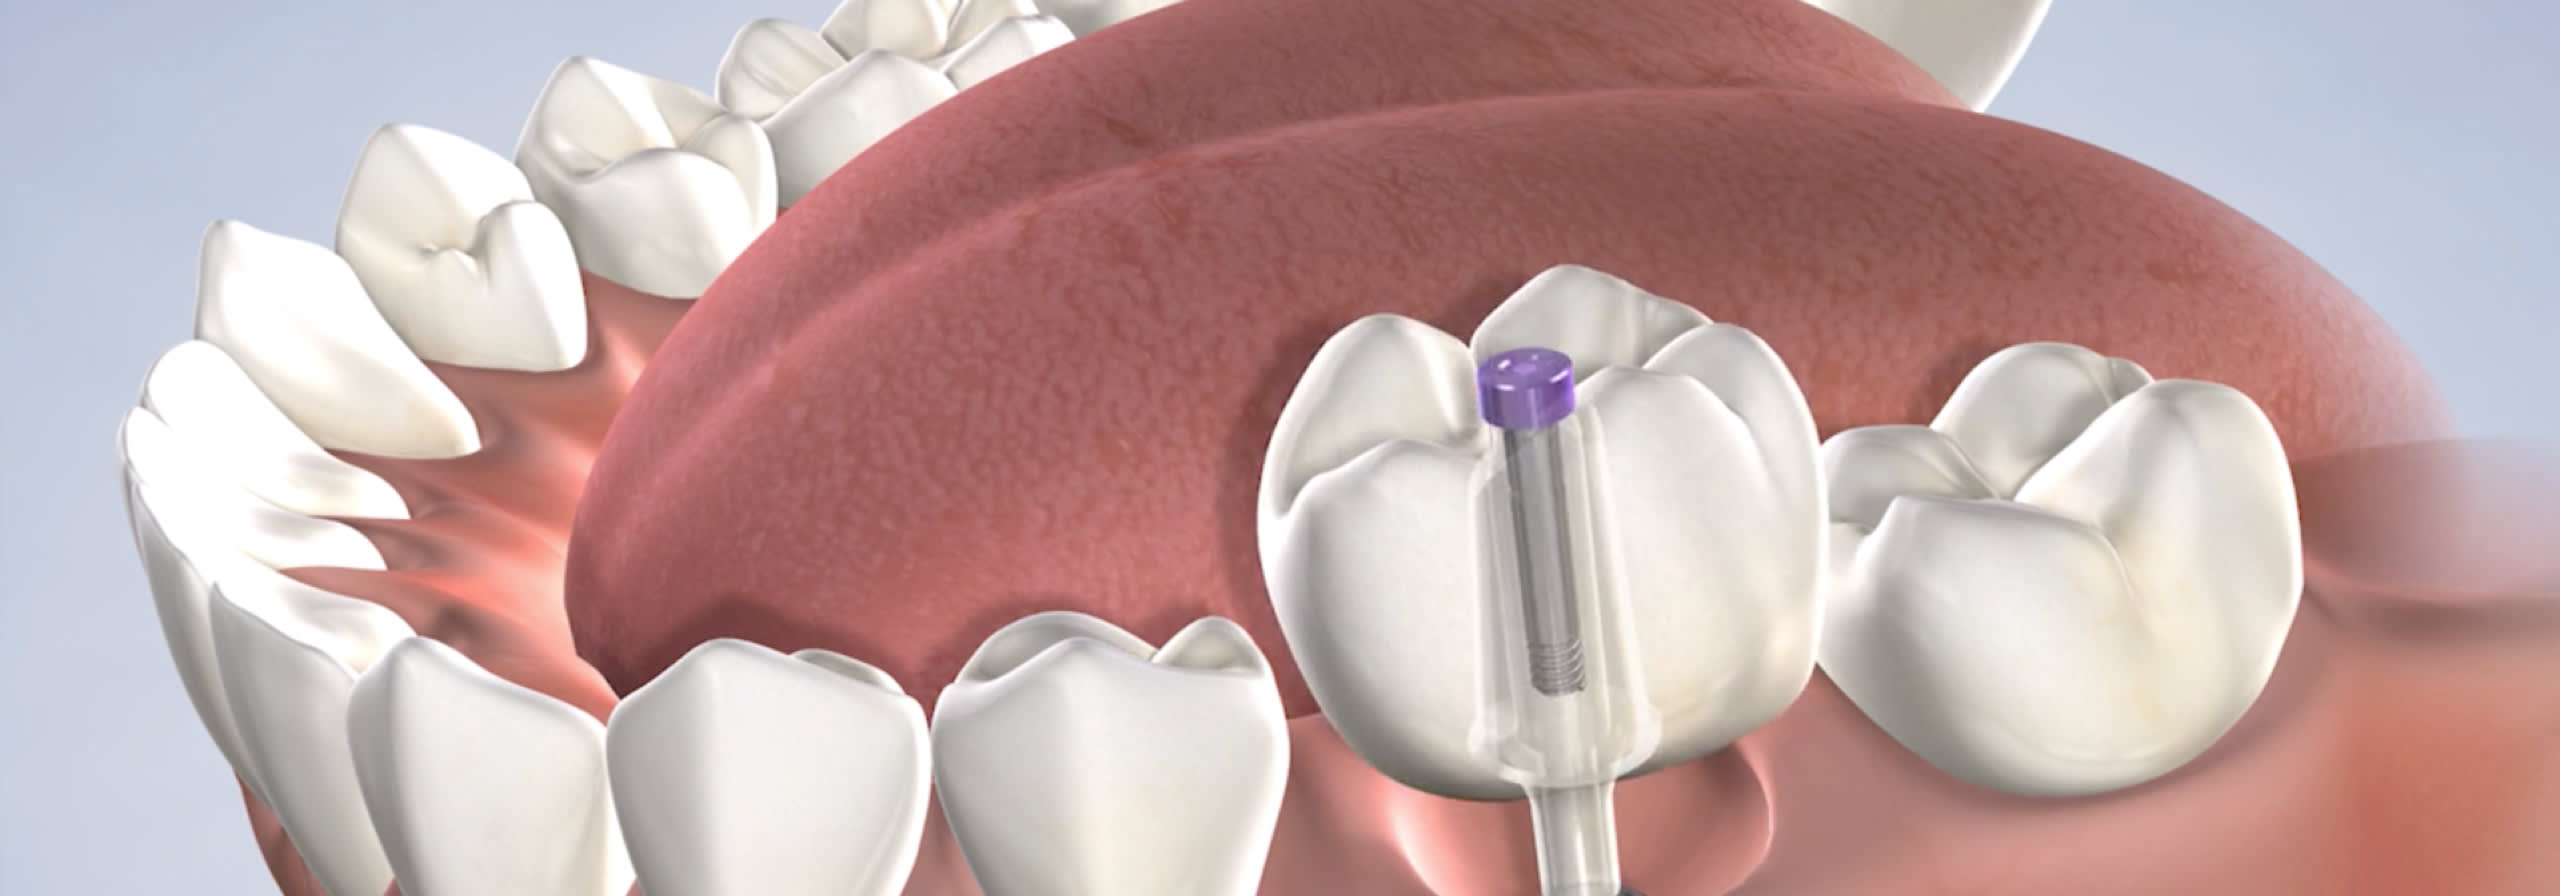 Dental implant procedure candidacy